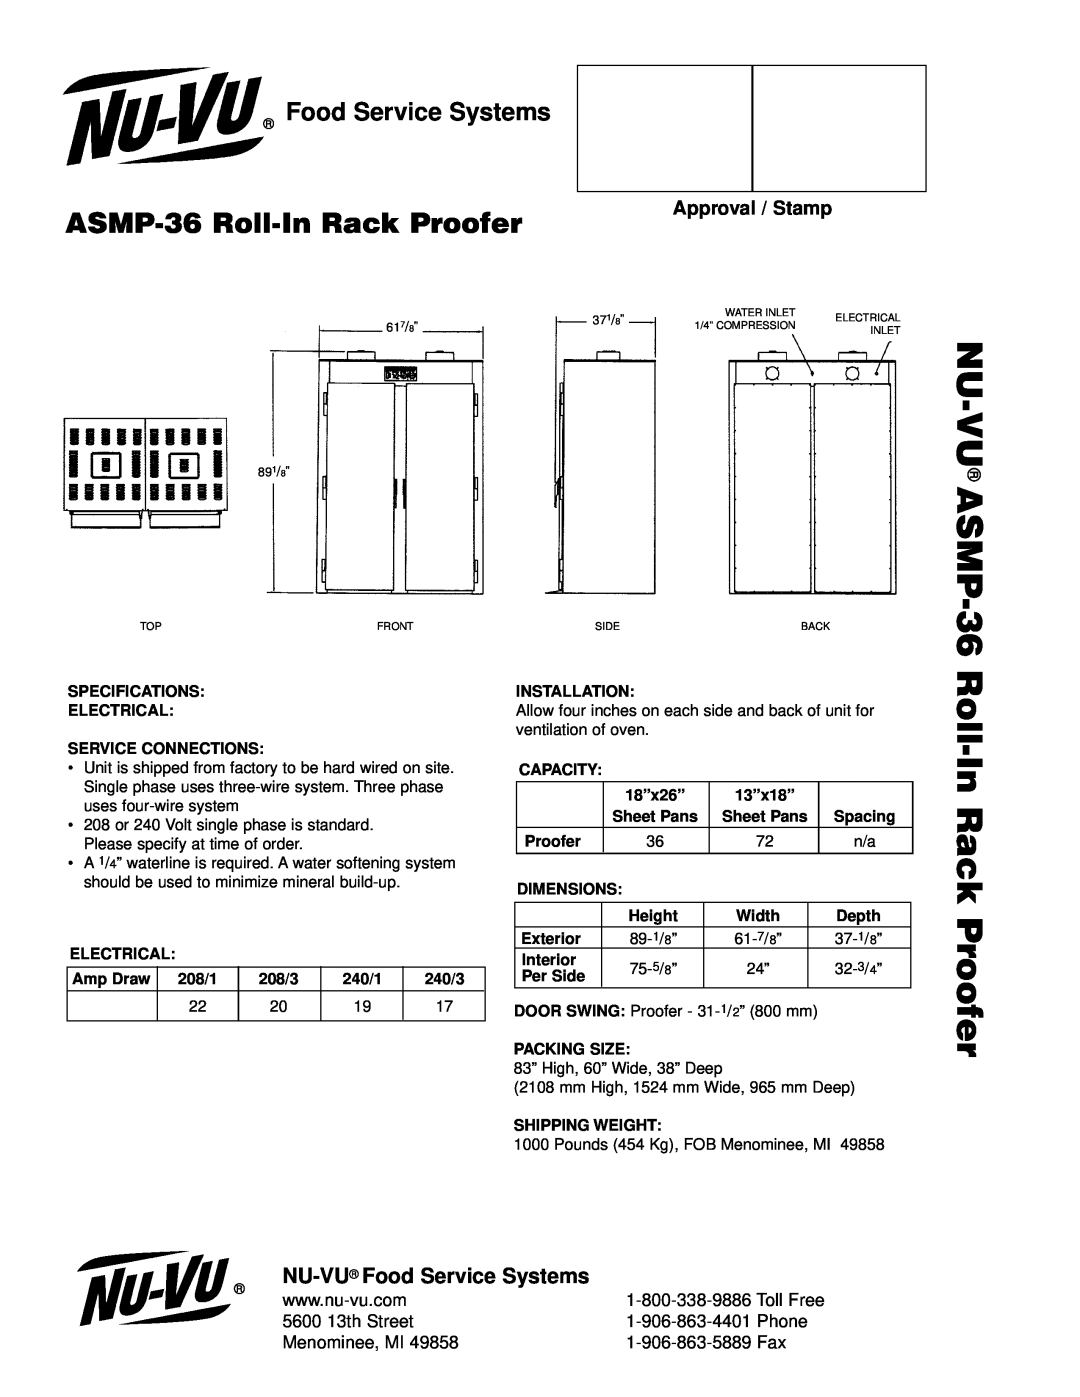 Nu-Vu manual NU-VU ASMP-36, ASMP-36 Roll-InRack Proofer, NU-VU Food Service Systems, Approval / Stamp, Phone 